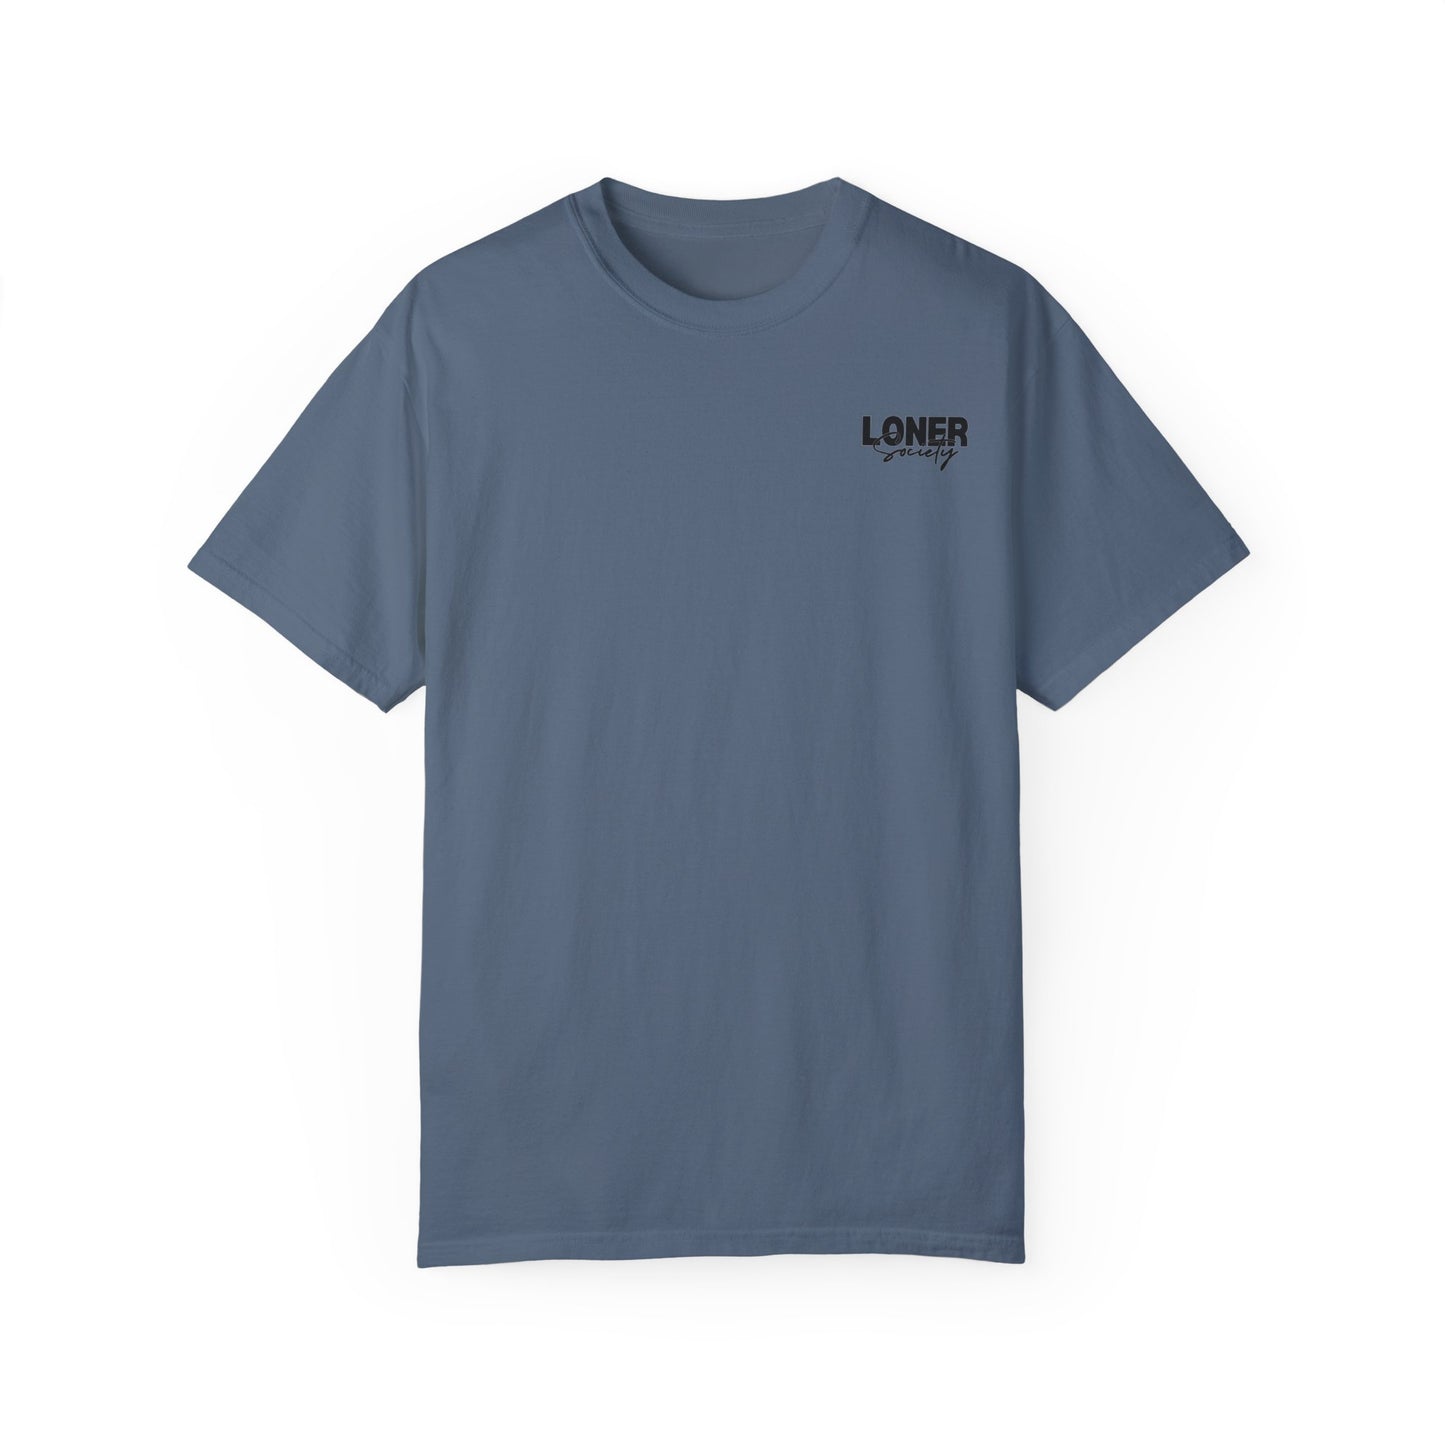 Loner Society - Comfort Colors T-shirt